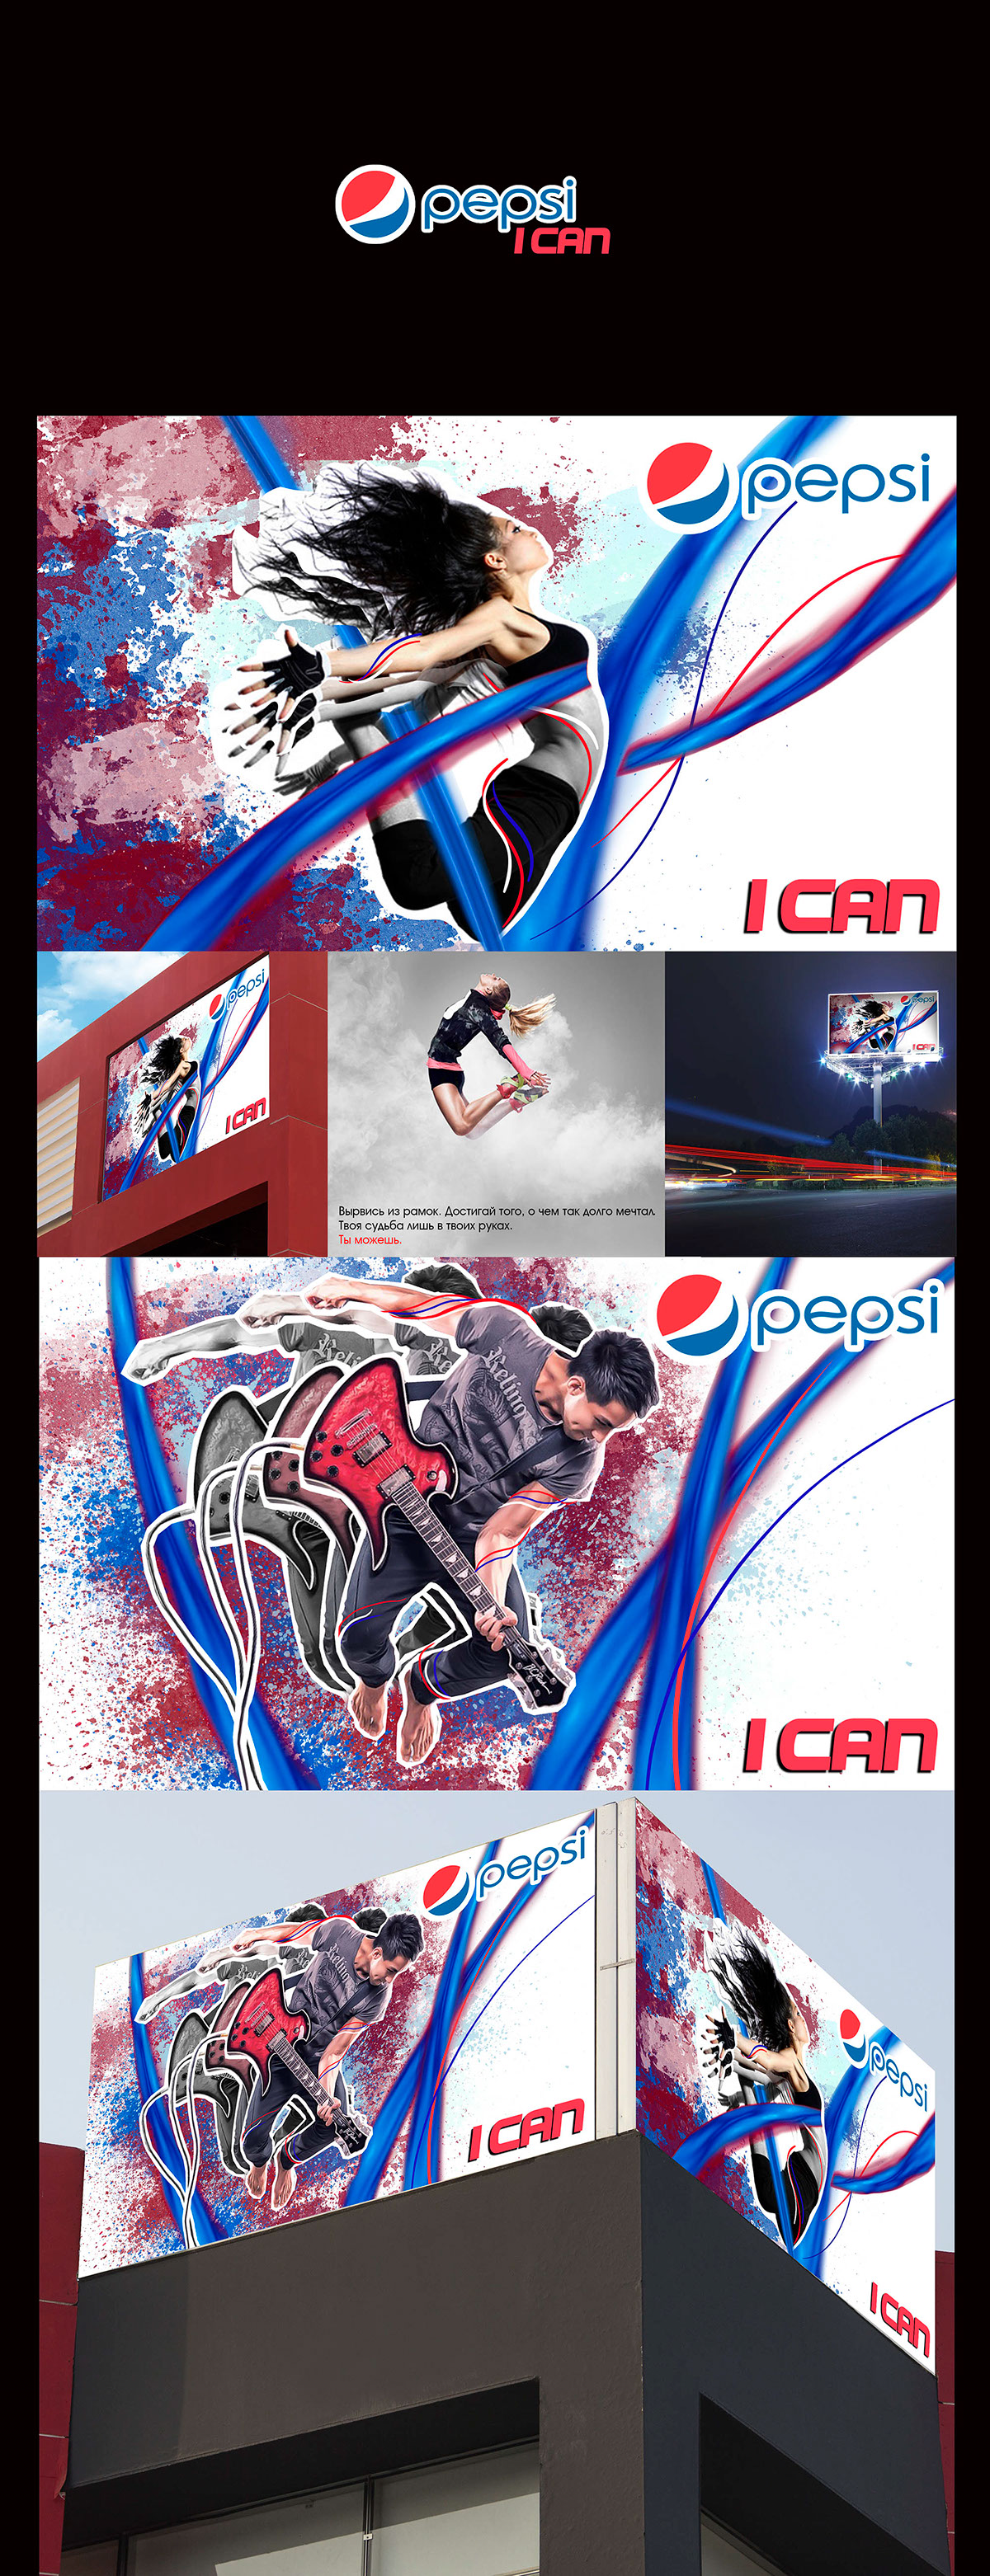 pepsi iCan I CAN can billboard ADV brand pepsi cola cola outside girl boy jump